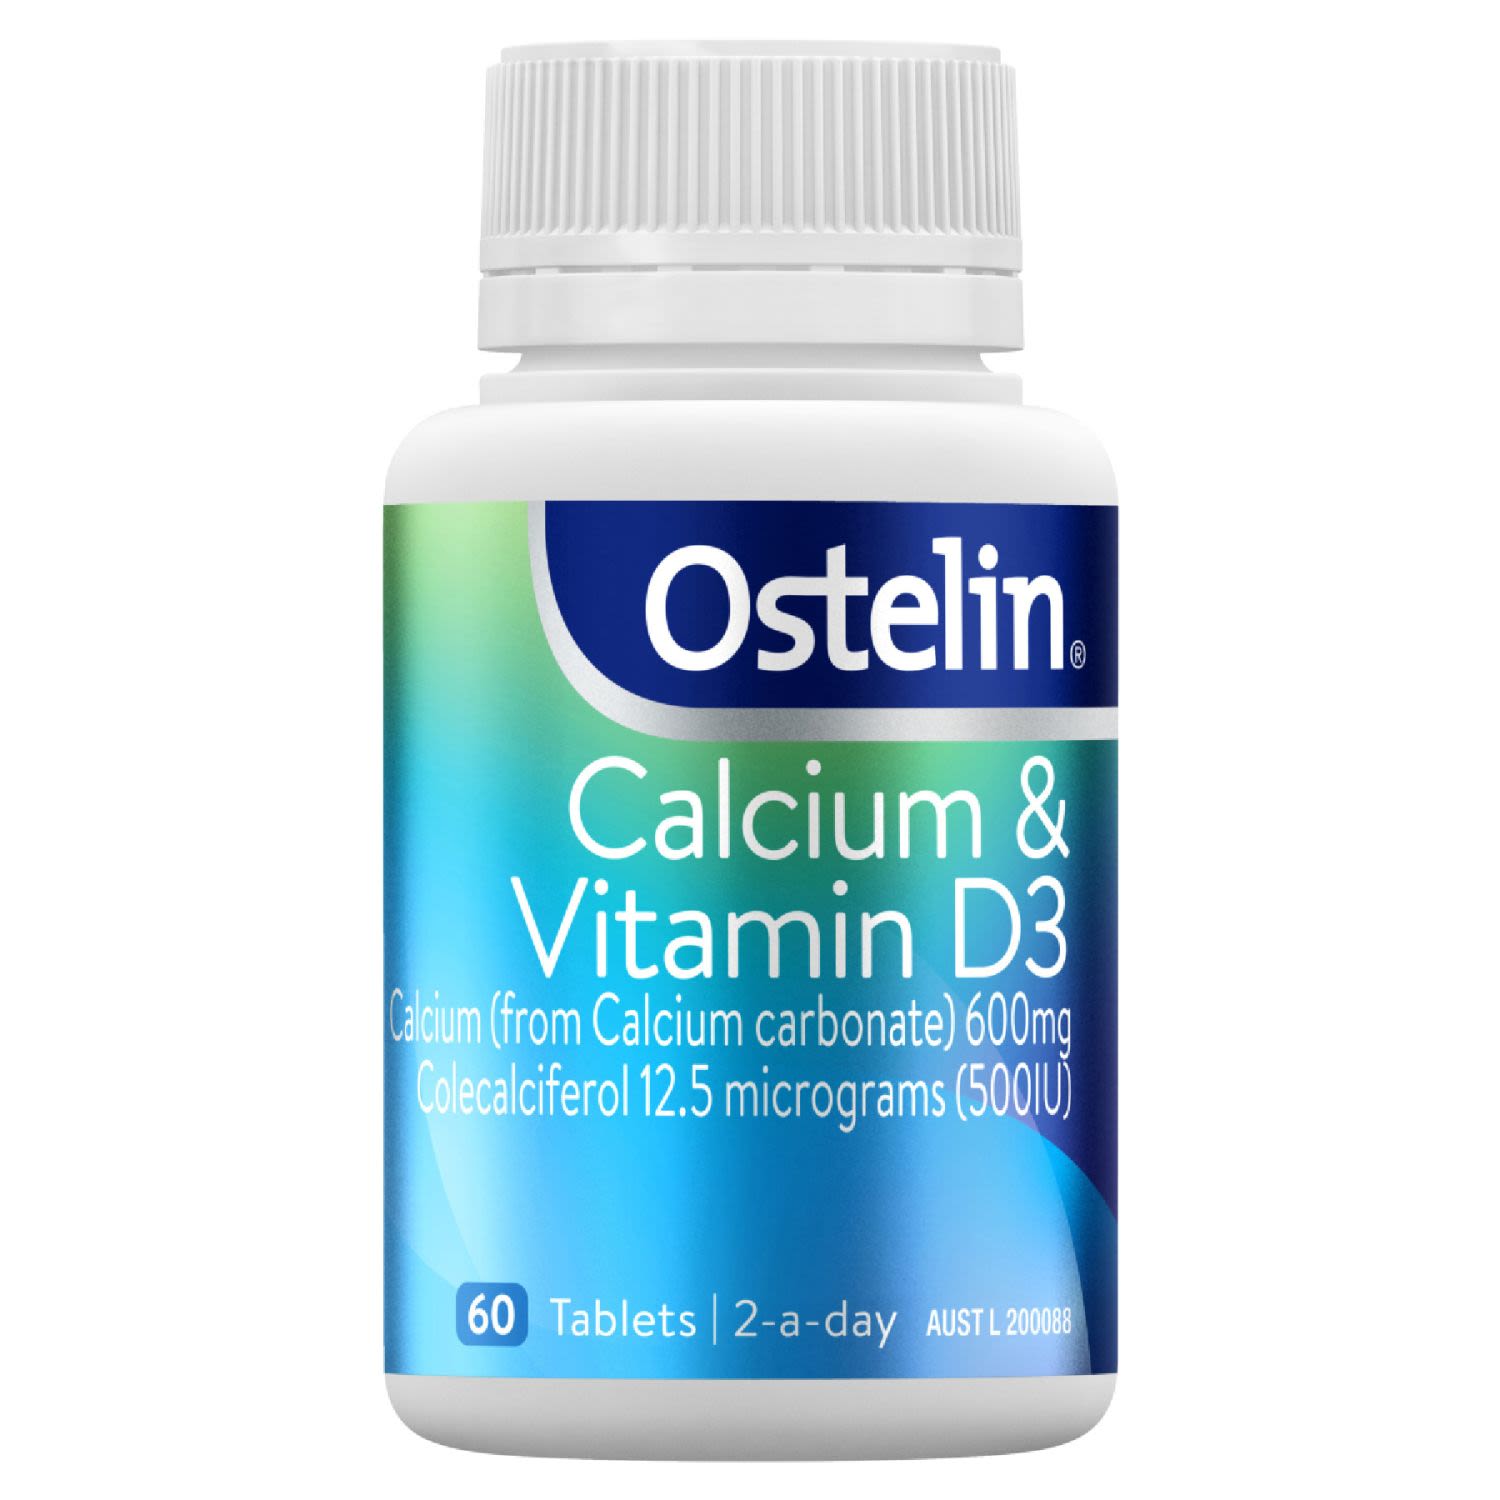 Ostelin Calcium & Vitamin D3, 60 Each